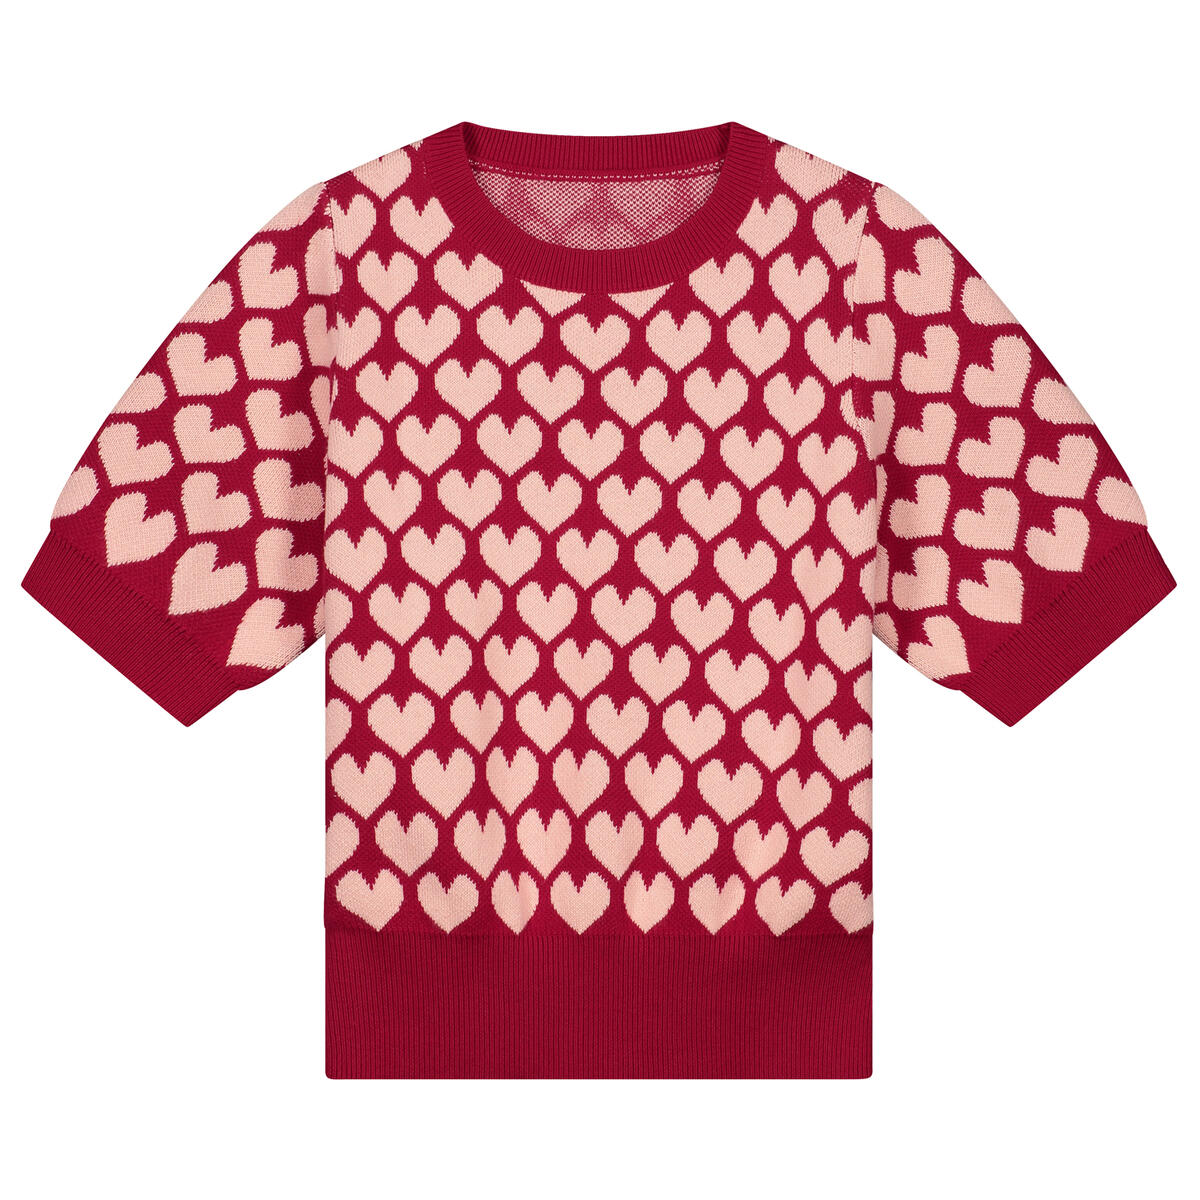 Daily Brat Heart knittedd t-shirt cherish red